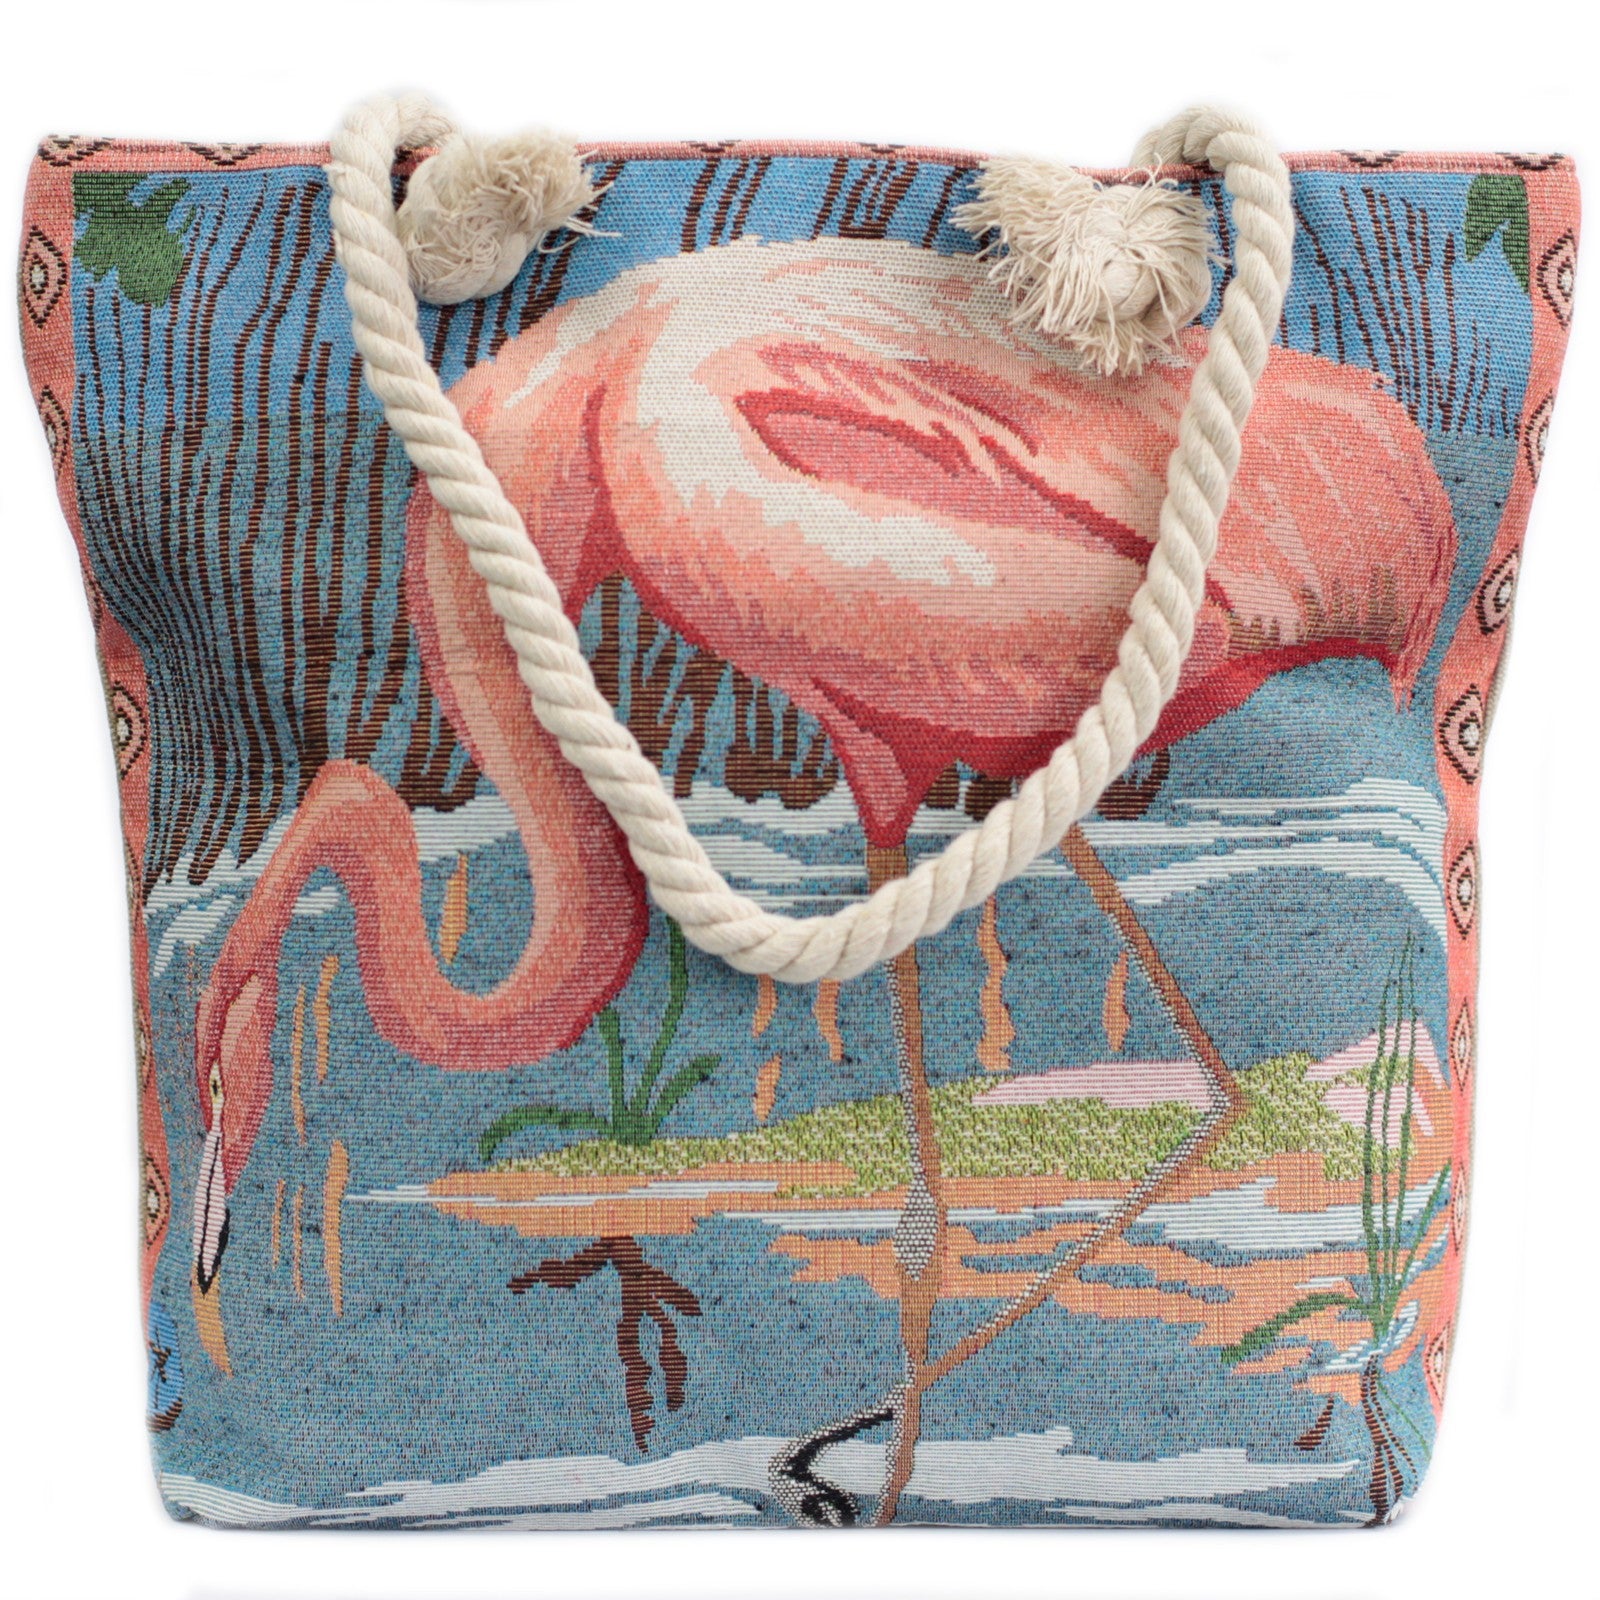 View Rope Handle Bag Pink Flamingo information